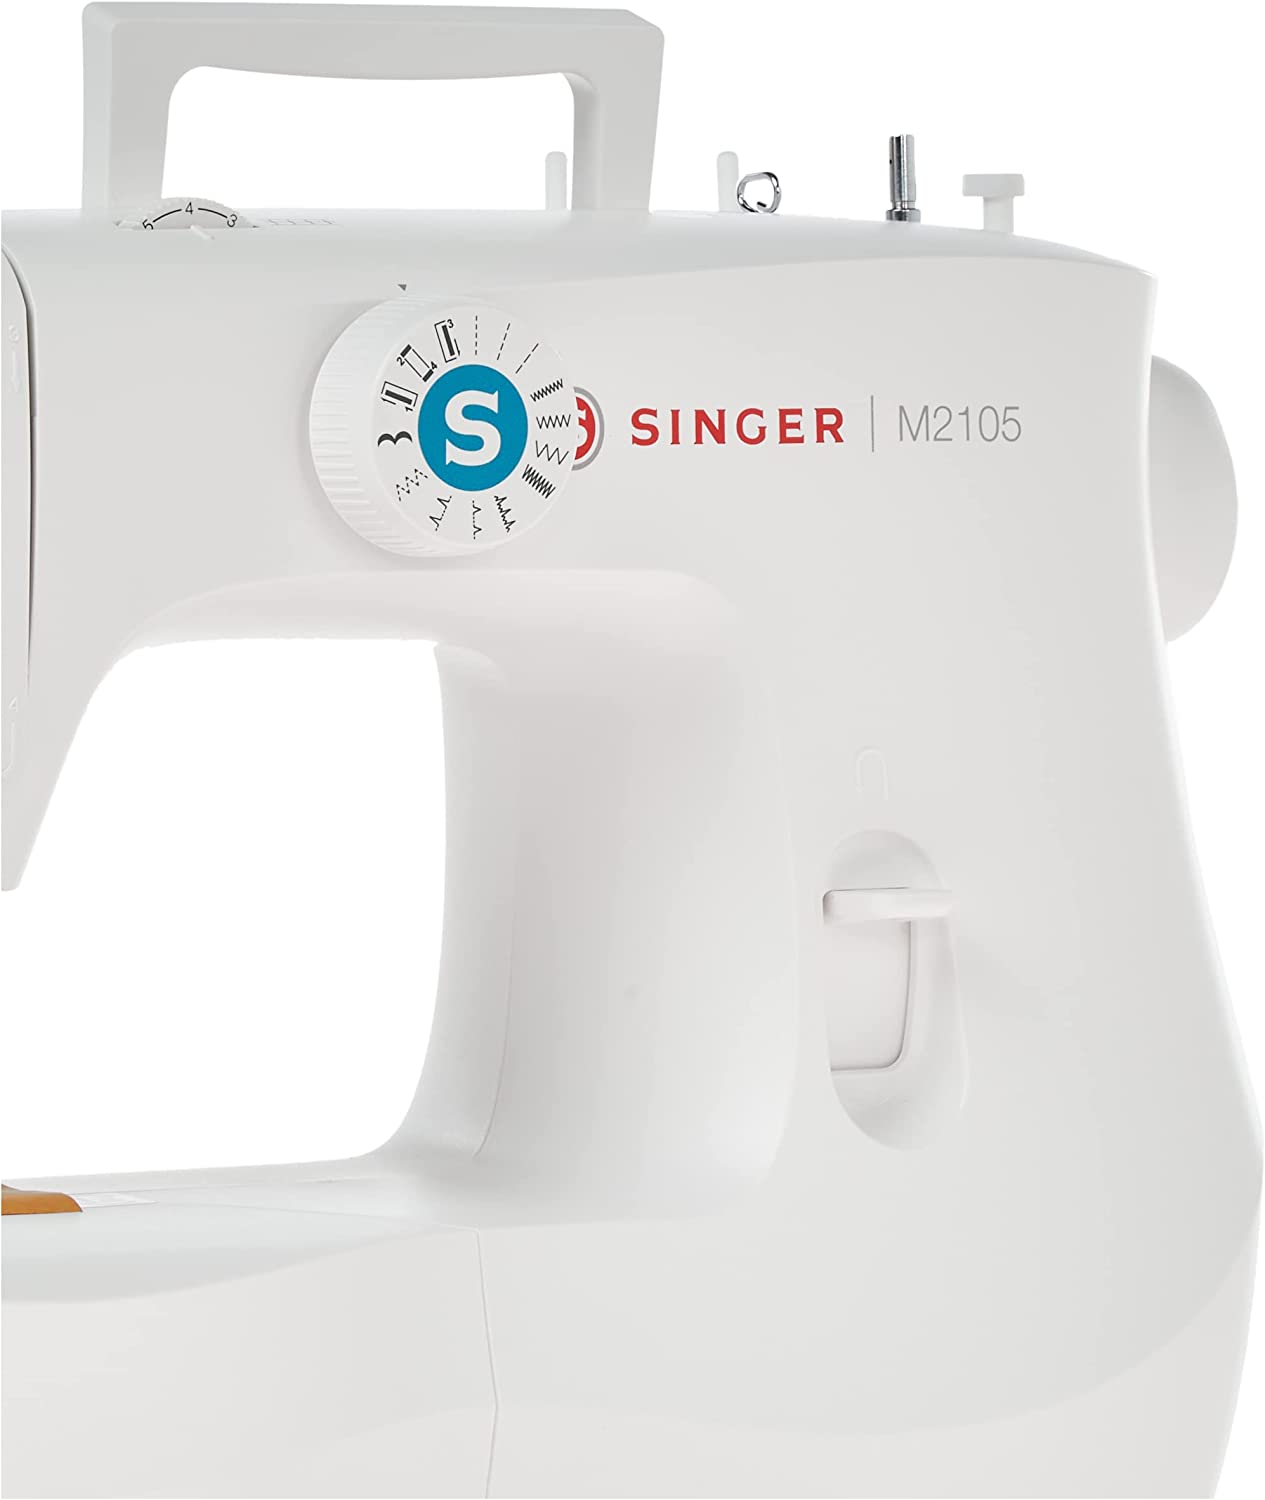 چرخ خیاطی سینگر مدل Singer Sewing Machine M2105 - ارسال 10 الی 15 روز کاری